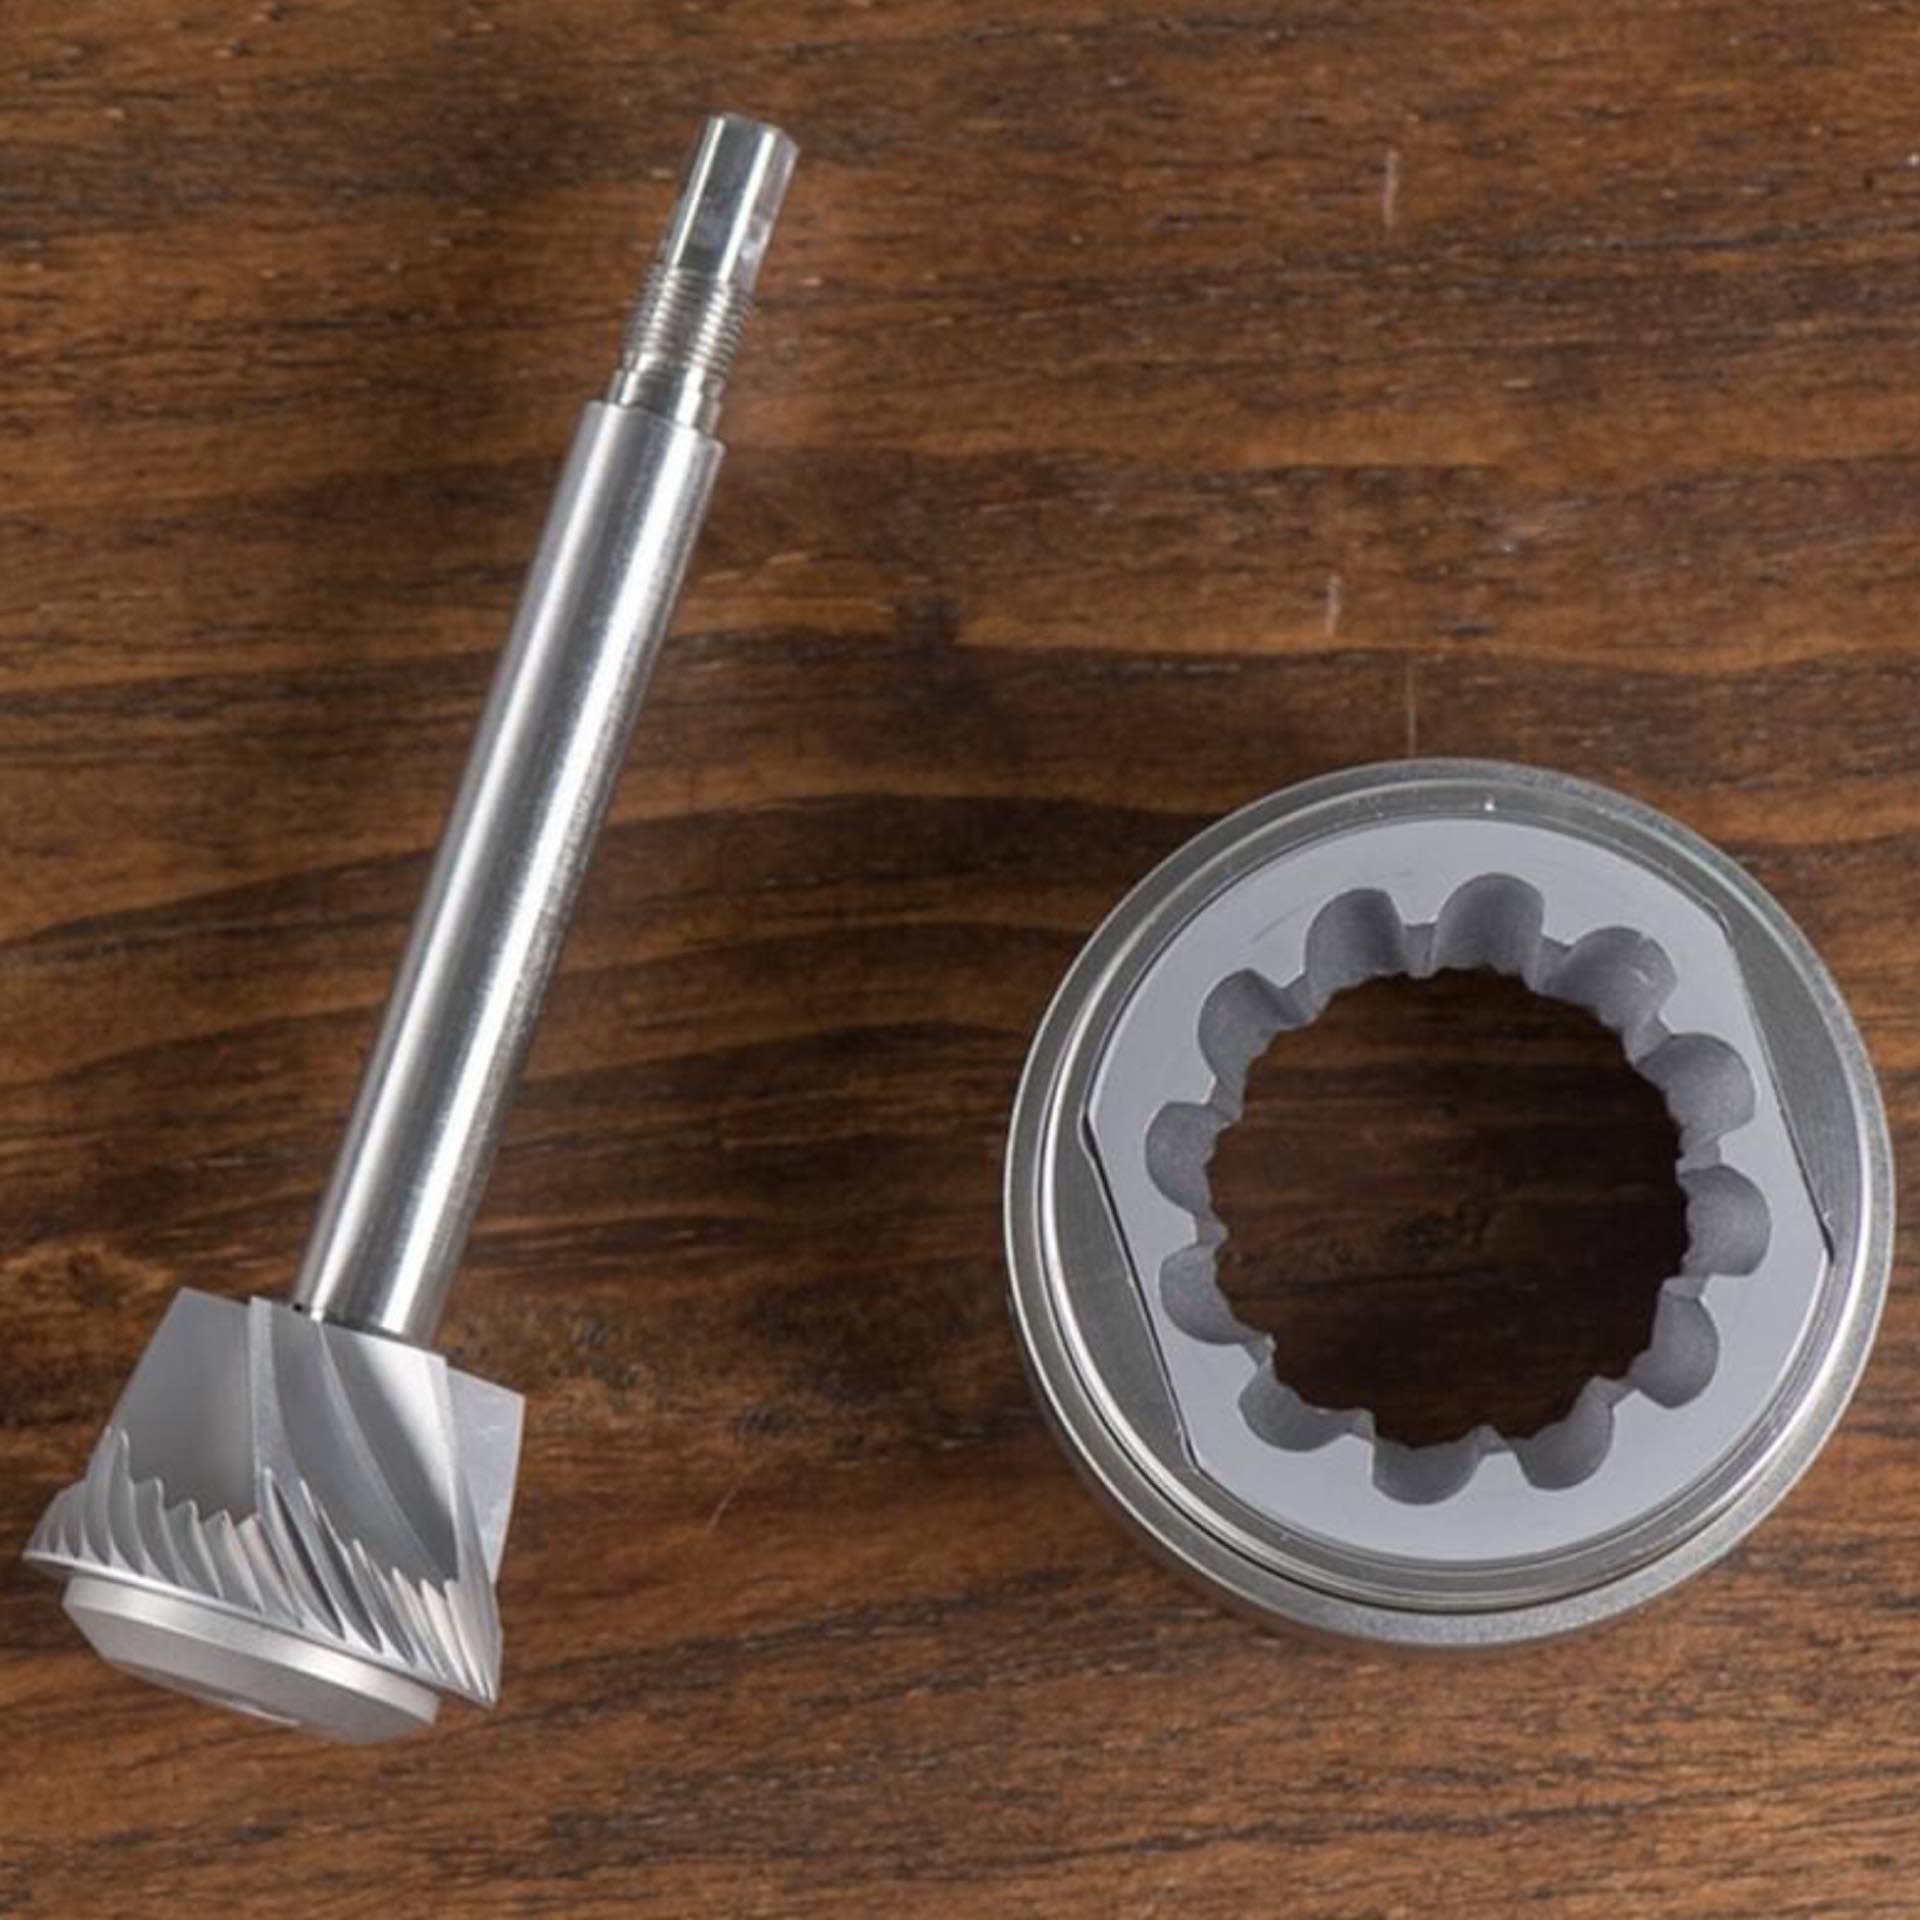 1zpresso-jx-pro-espresso-hand-grinder-48mm-stainless-steel-burrs